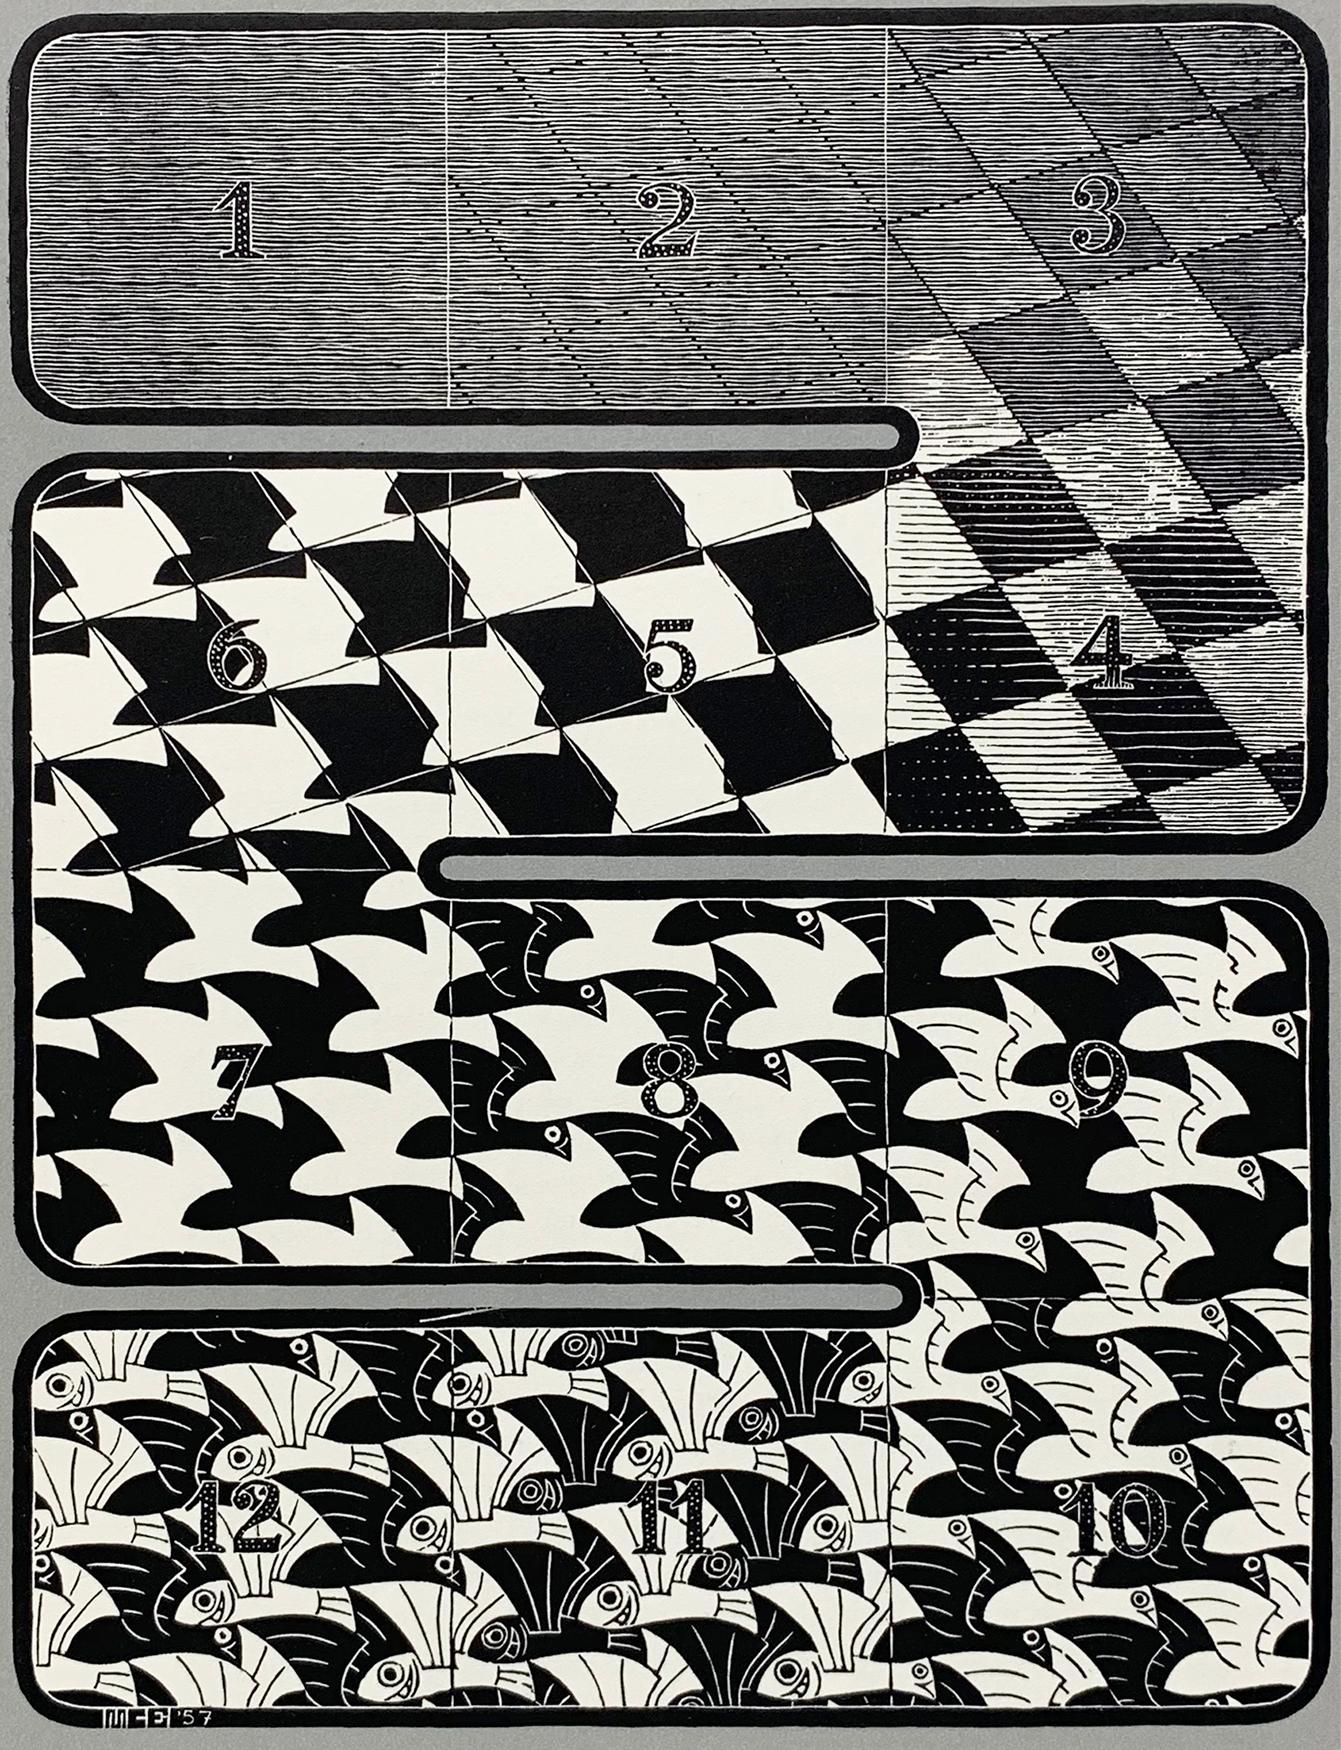 Regular Division of the Plane I "Metamorphosis" - Print by M.C. Escher